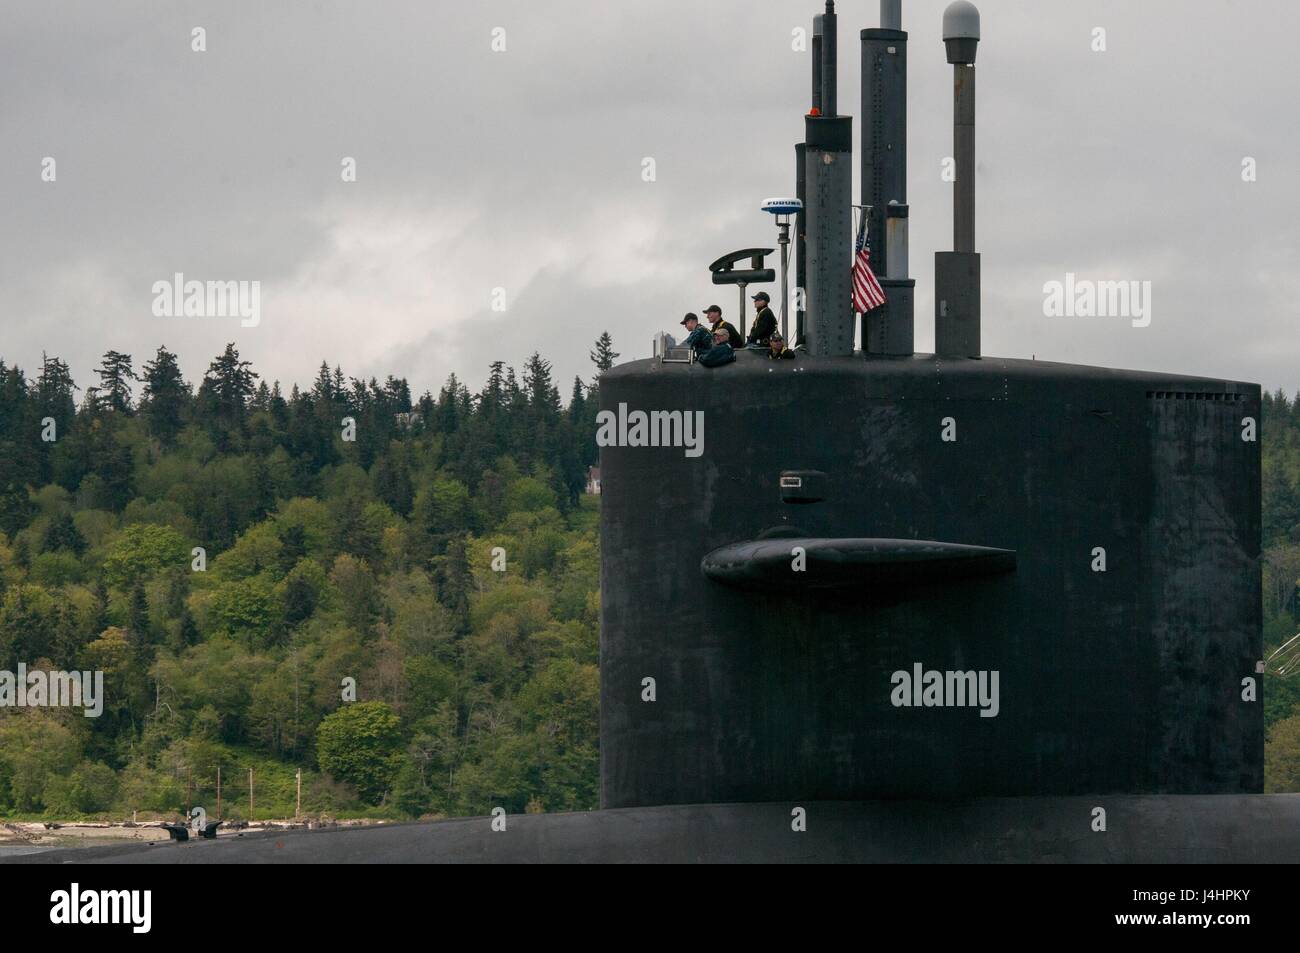 L'USN Ohio-class flotta ballistic-missile submarine USS Alabama transita il cofano Canal Aprile 28, 2017 in Puget Sound, Washington. (Foto di Amanda R. Gray/US Navy via Planetpix) Foto Stock